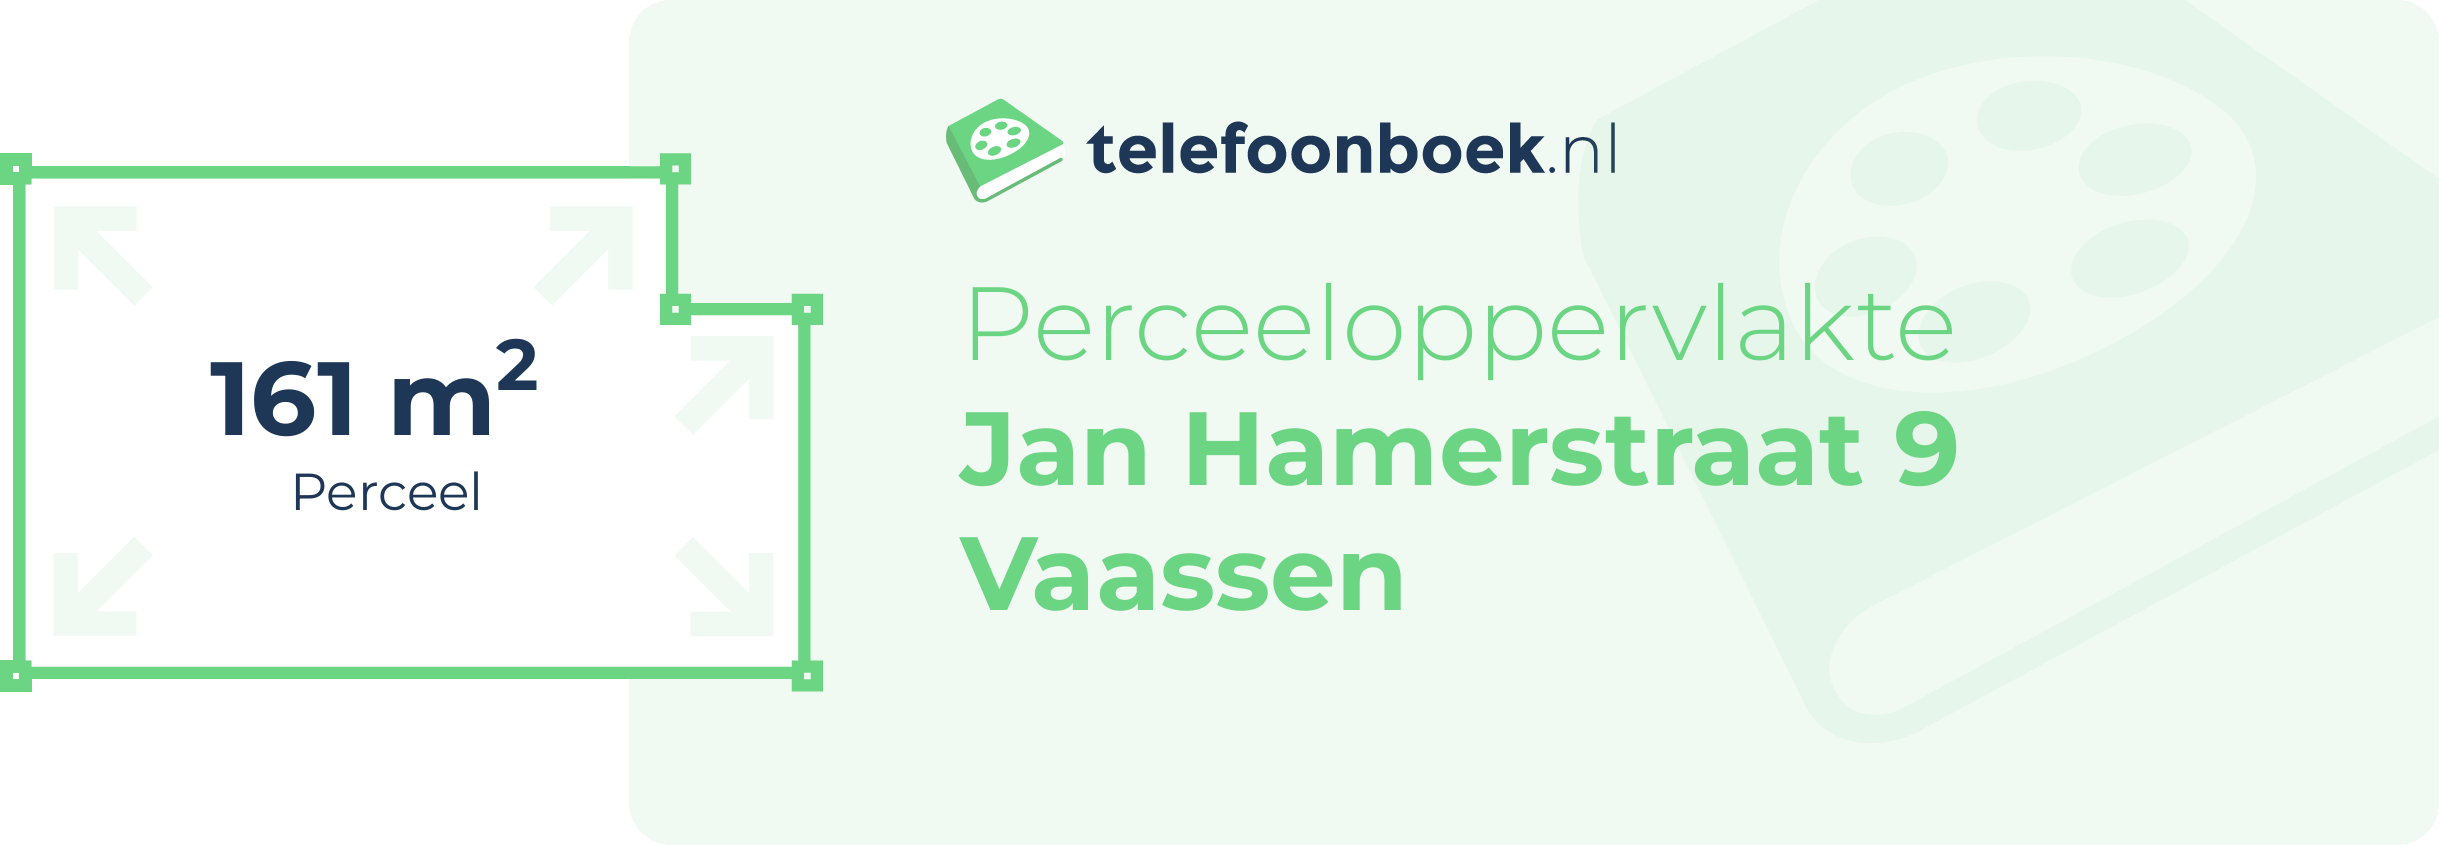 Perceeloppervlakte Jan Hamerstraat 9 Vaassen